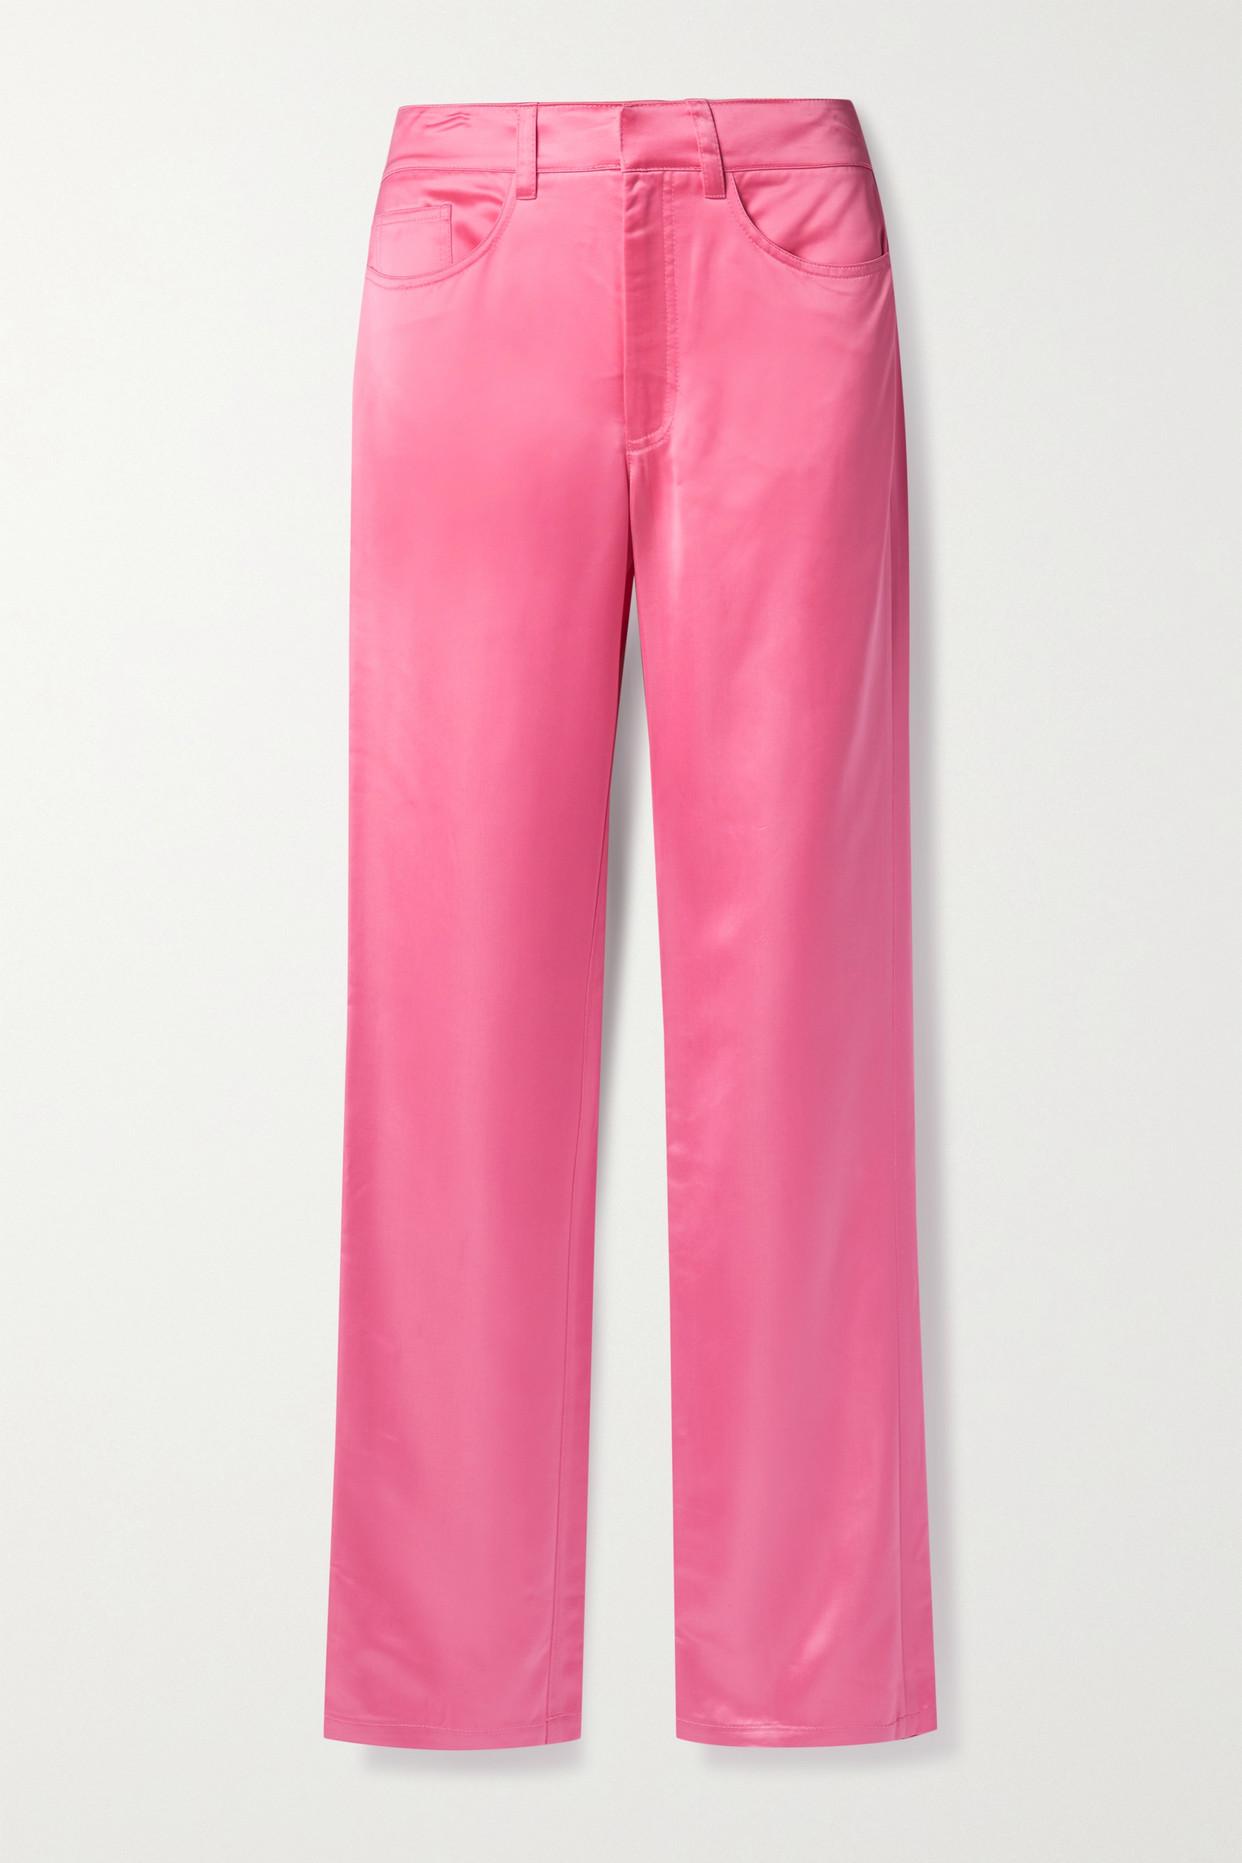 A.L.C. Hartford Satin Straight-leg Pants in Pink